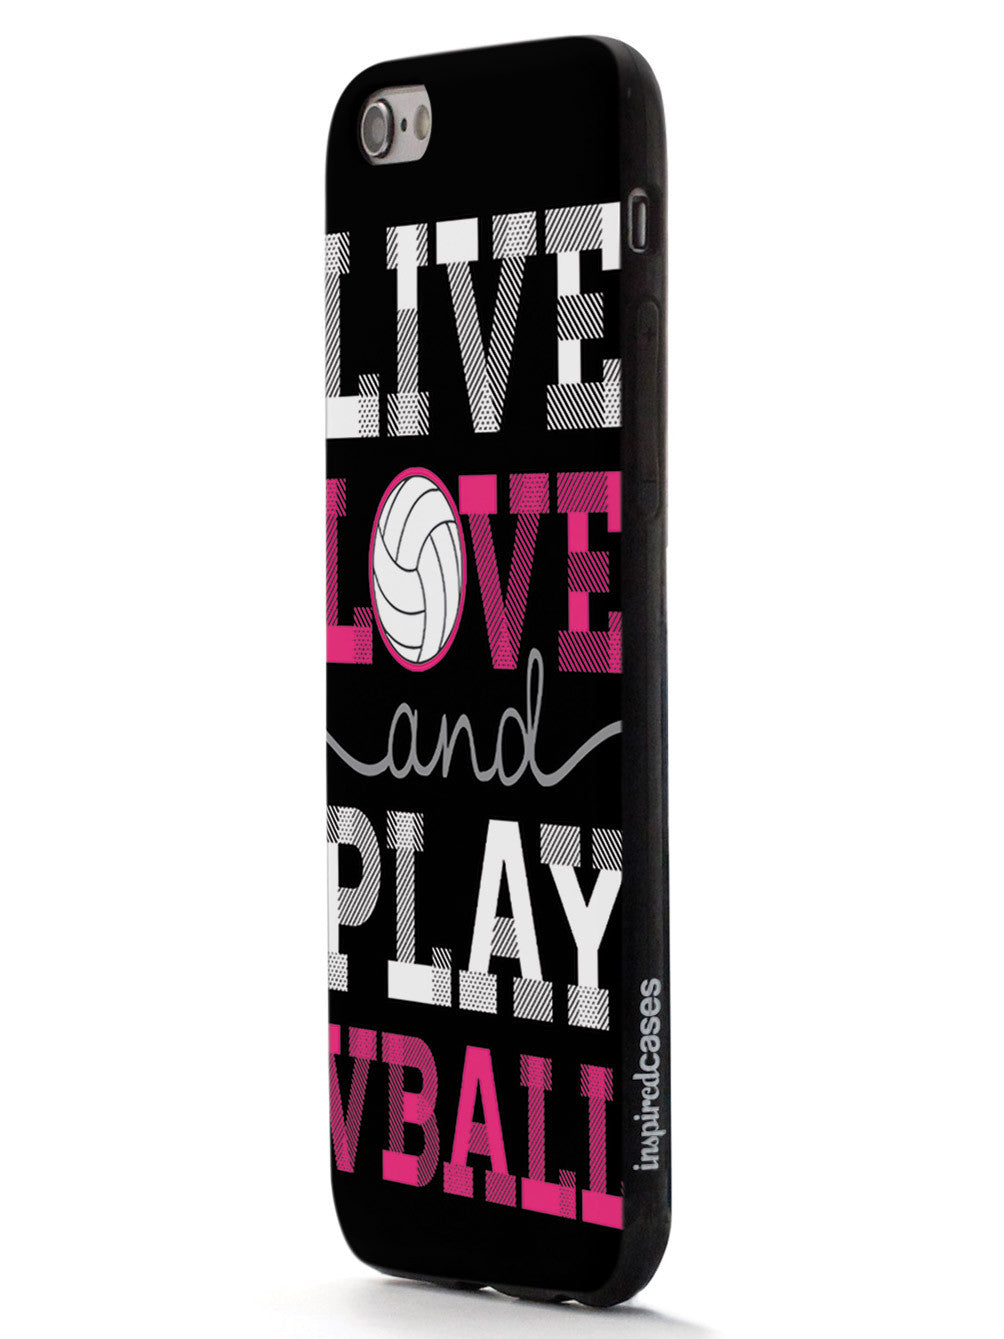 Live Love & Play Vball Case